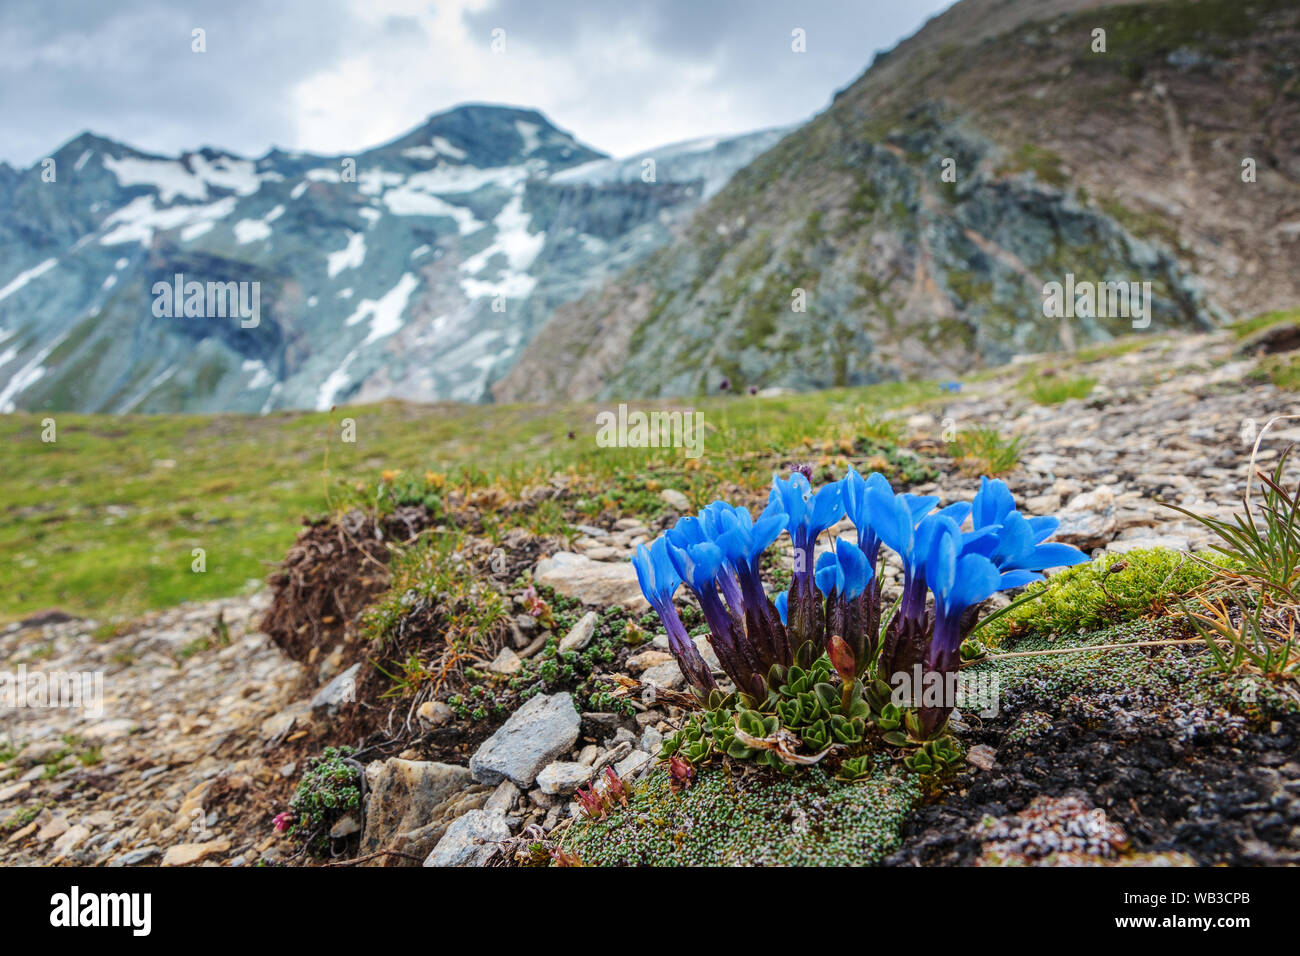 Gentiana Fleur alpine. La flore alpine de Glockner massif de montagne (Glocknergruppe-GroSSglockner). Alpes autrichiennes. Banque D'Images